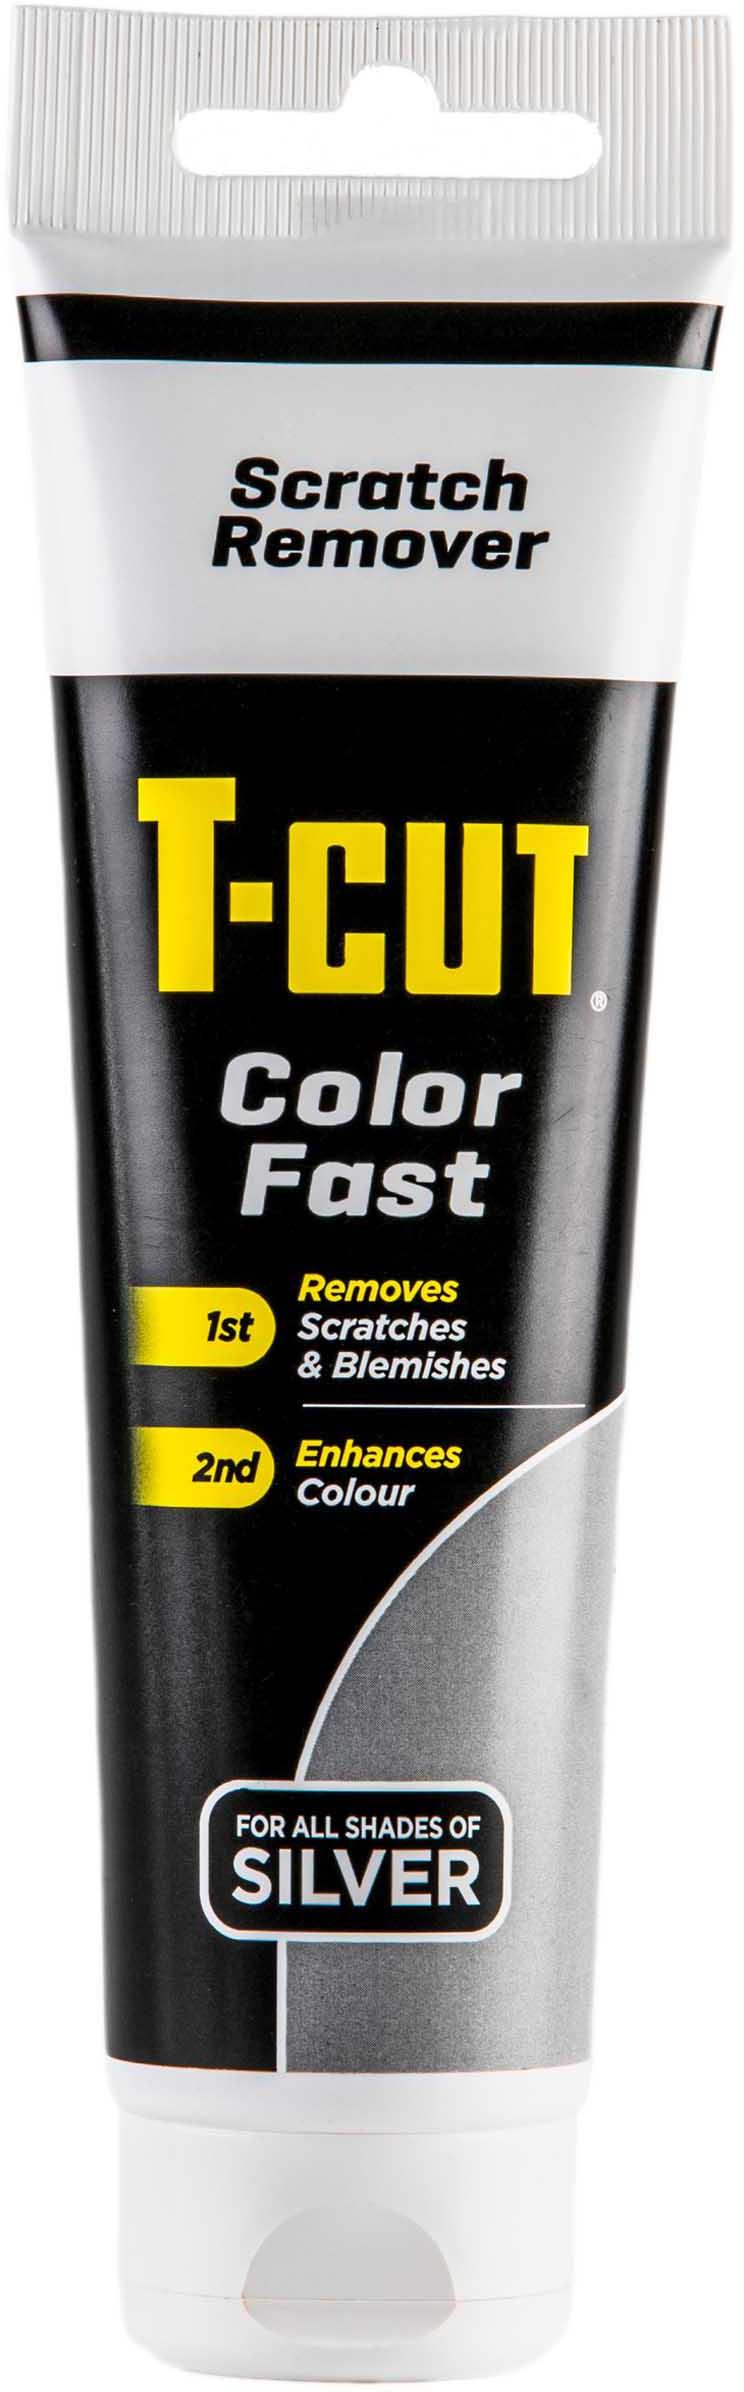 T-Cut Colour Fast Scratch Remover - Silver